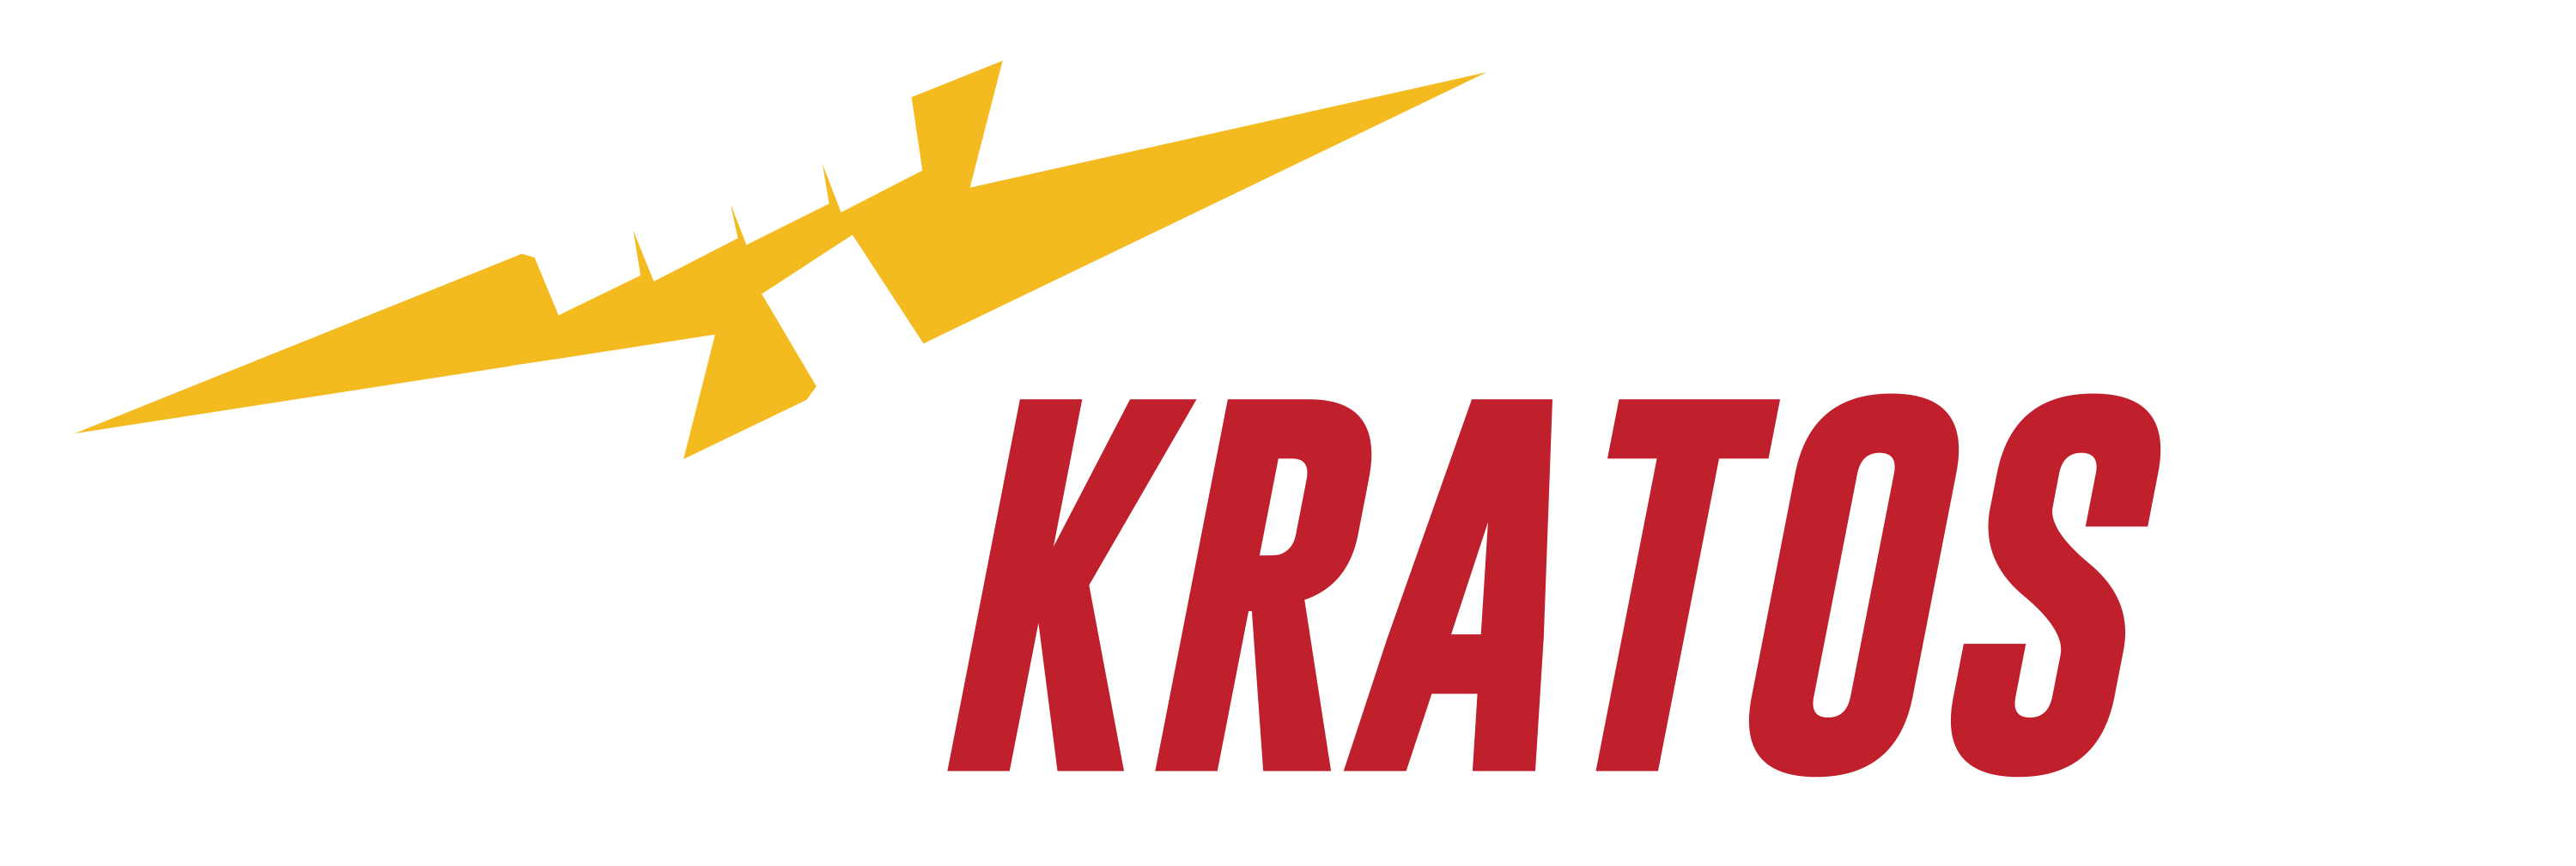 Main Kratos Logo